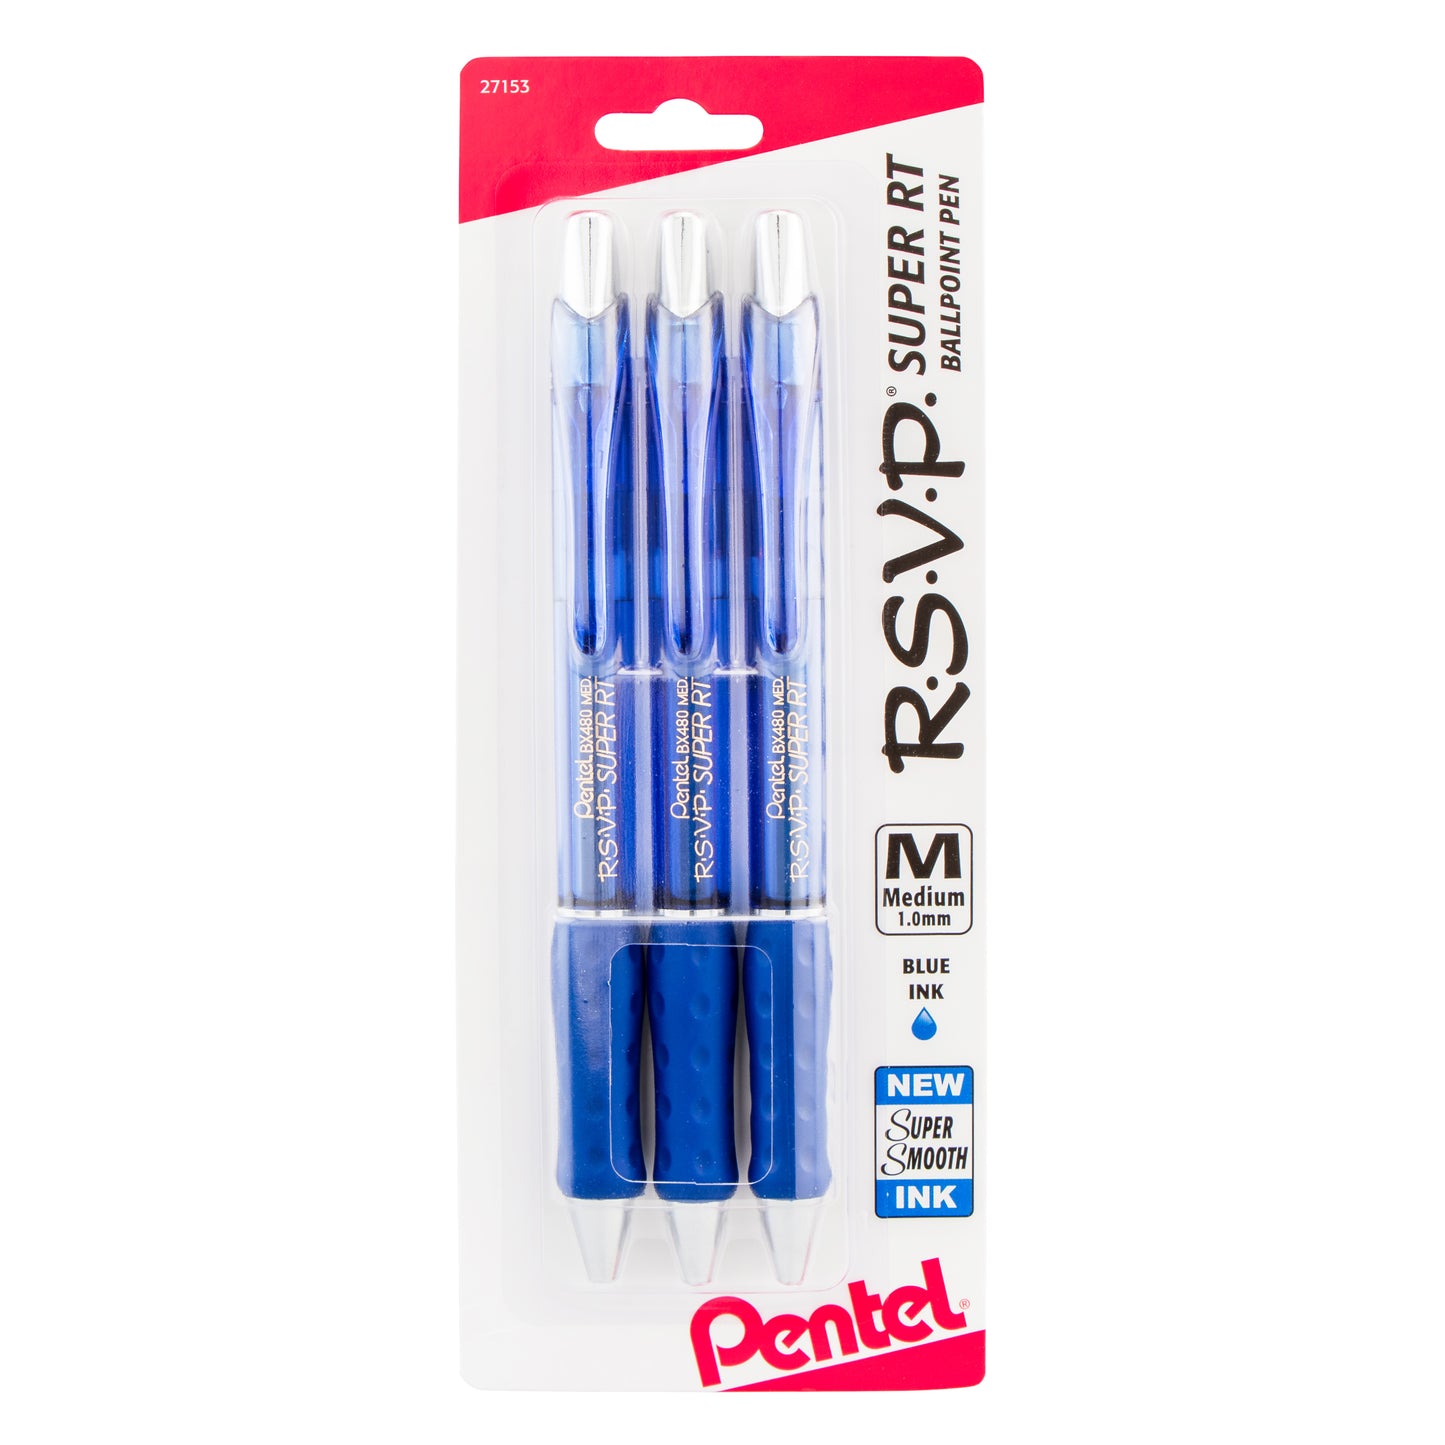 RSVP Super RT Ballpoint Pen, (1.0mm) Medium Line, Blue Ink, 3-Pk